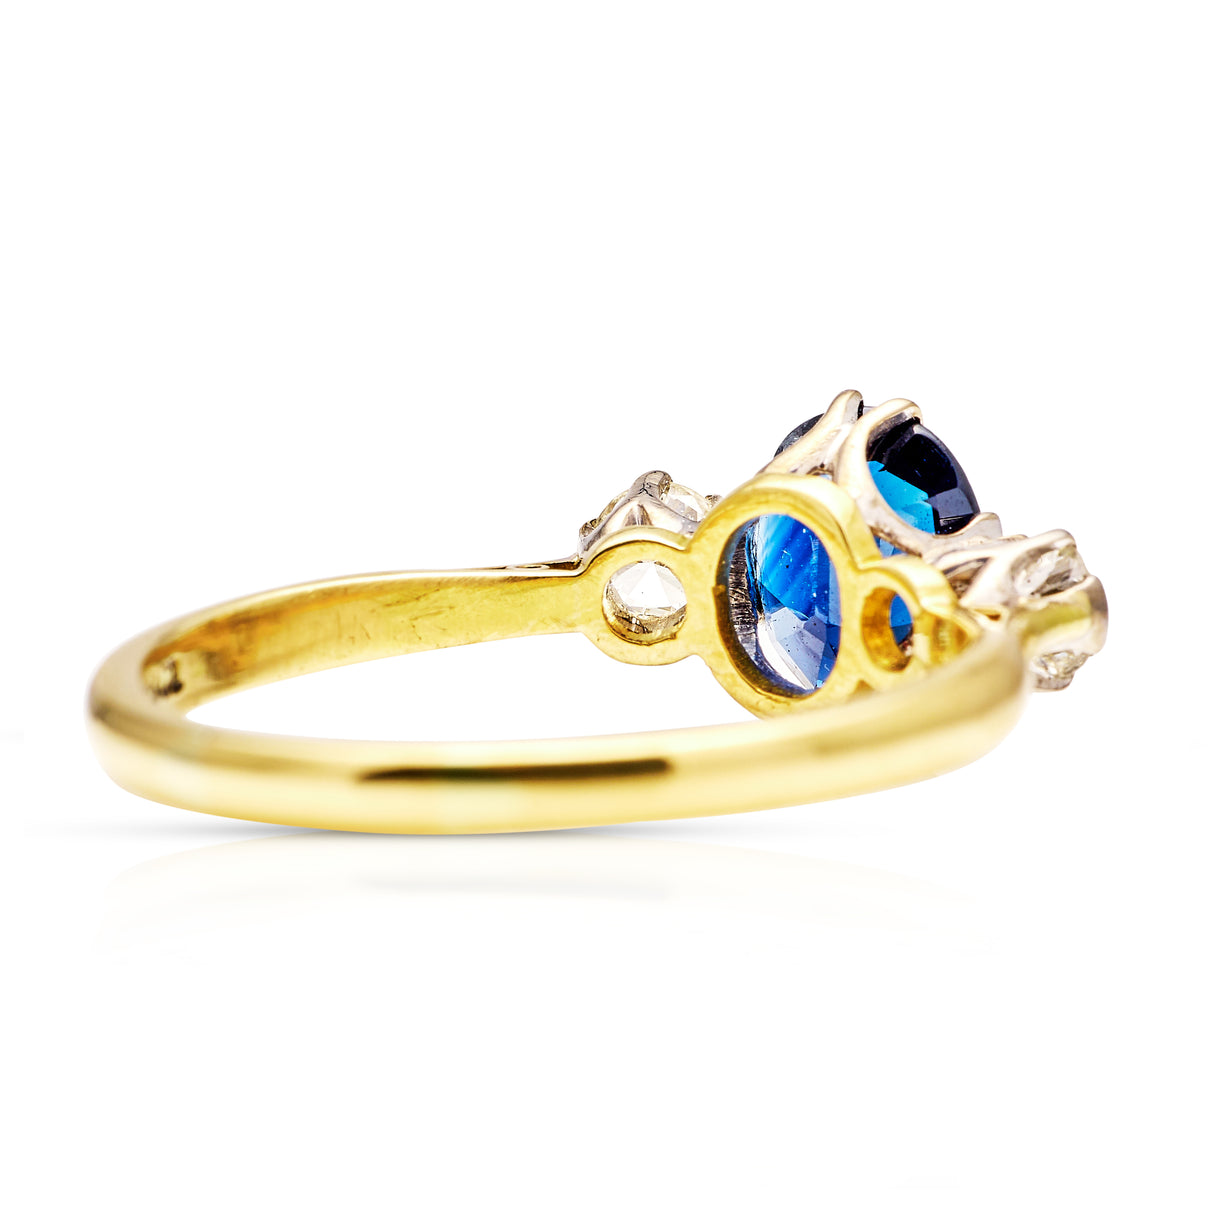 Vintage, Art Deco sapphire and diamond three-stone ring, 18ct yellow gold and platinum